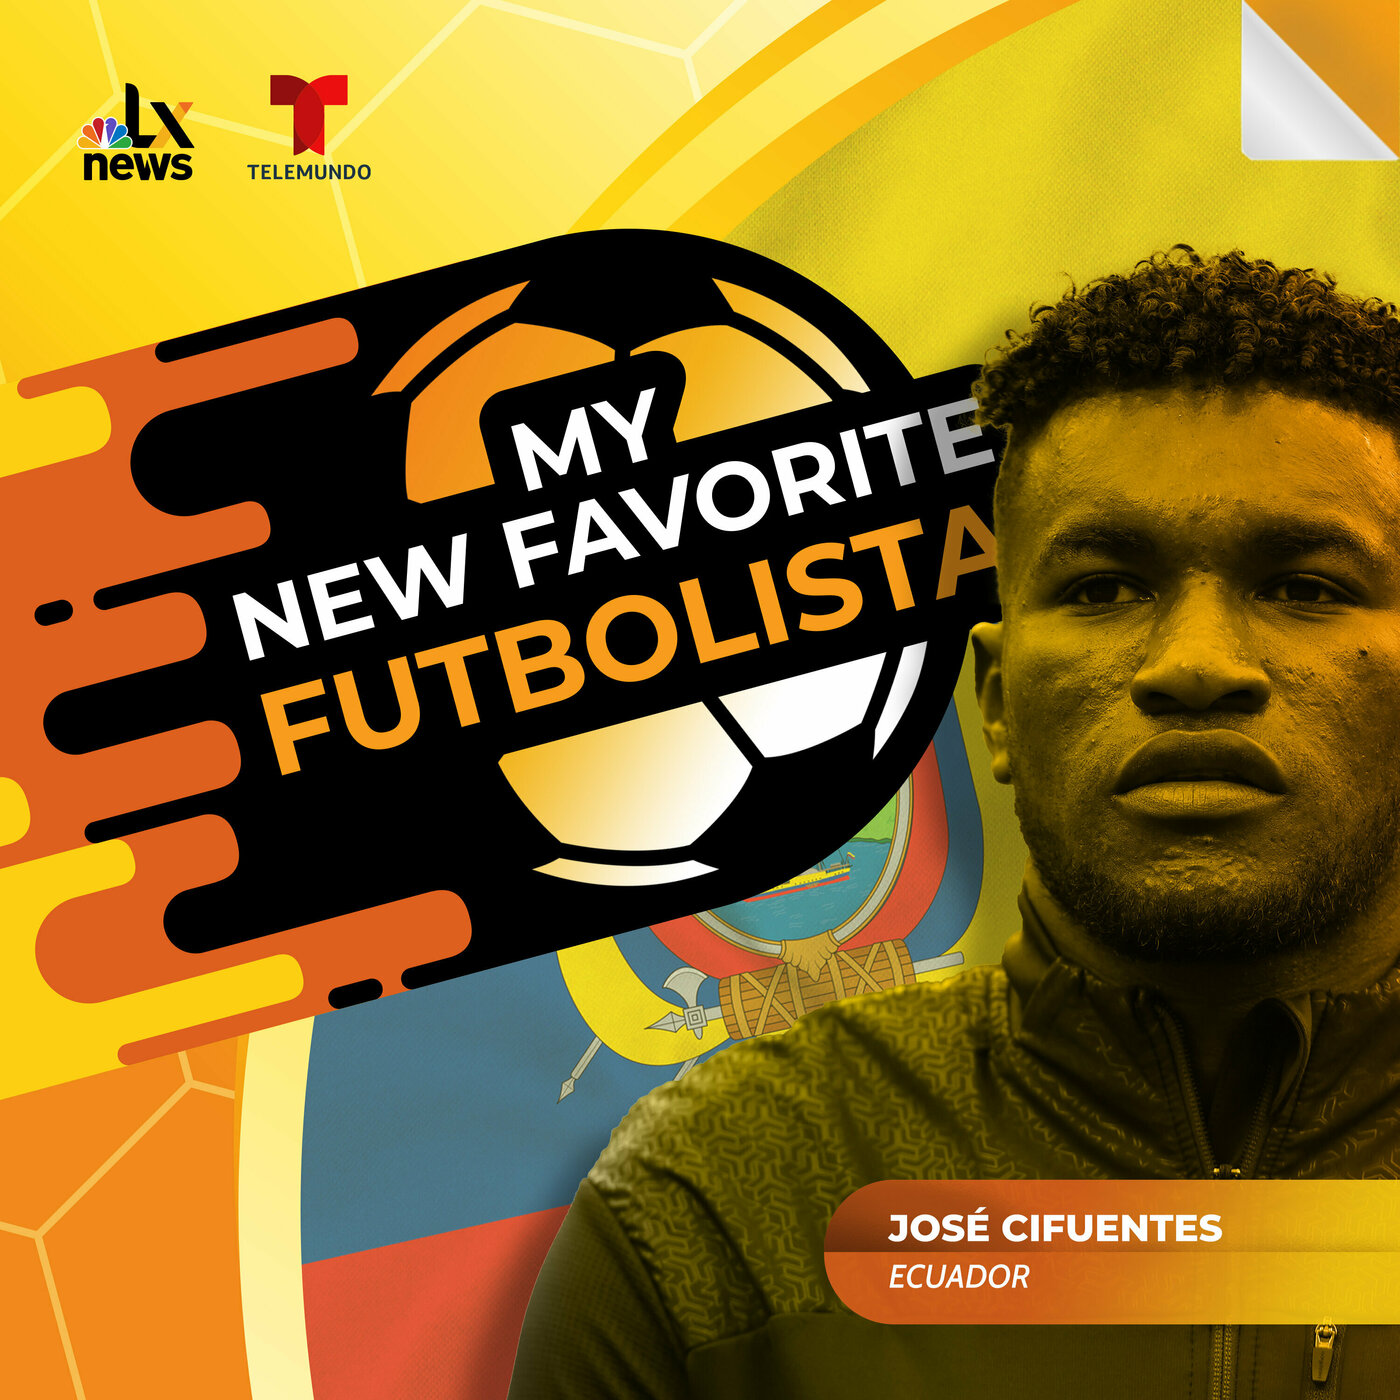 José Cifuentes: Educating soccer’s ‘forgotten’ kids